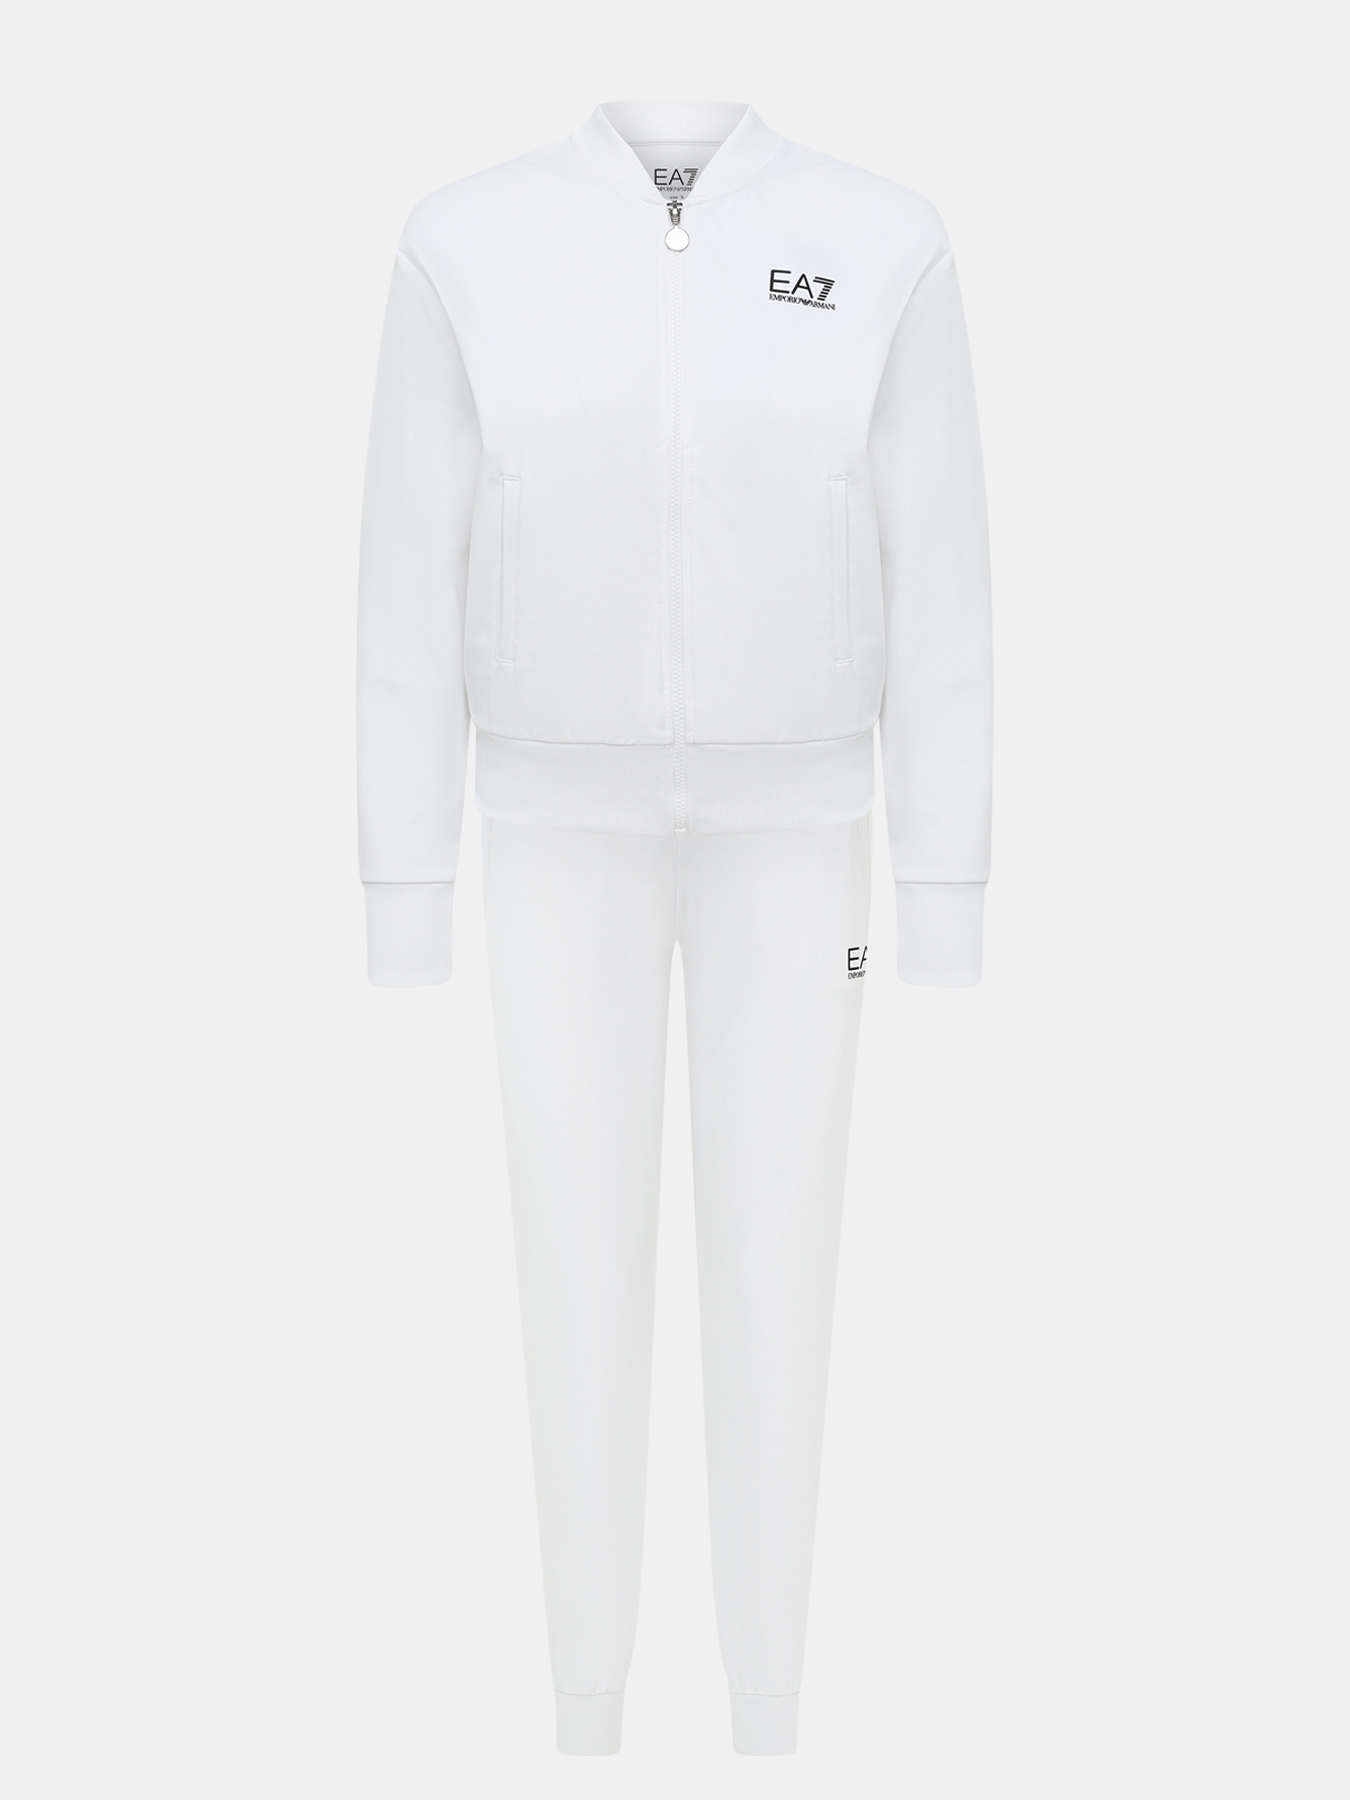 Спортивный костюм EA7 Emporio Armani 434529-042, цвет белый, размер 42-44